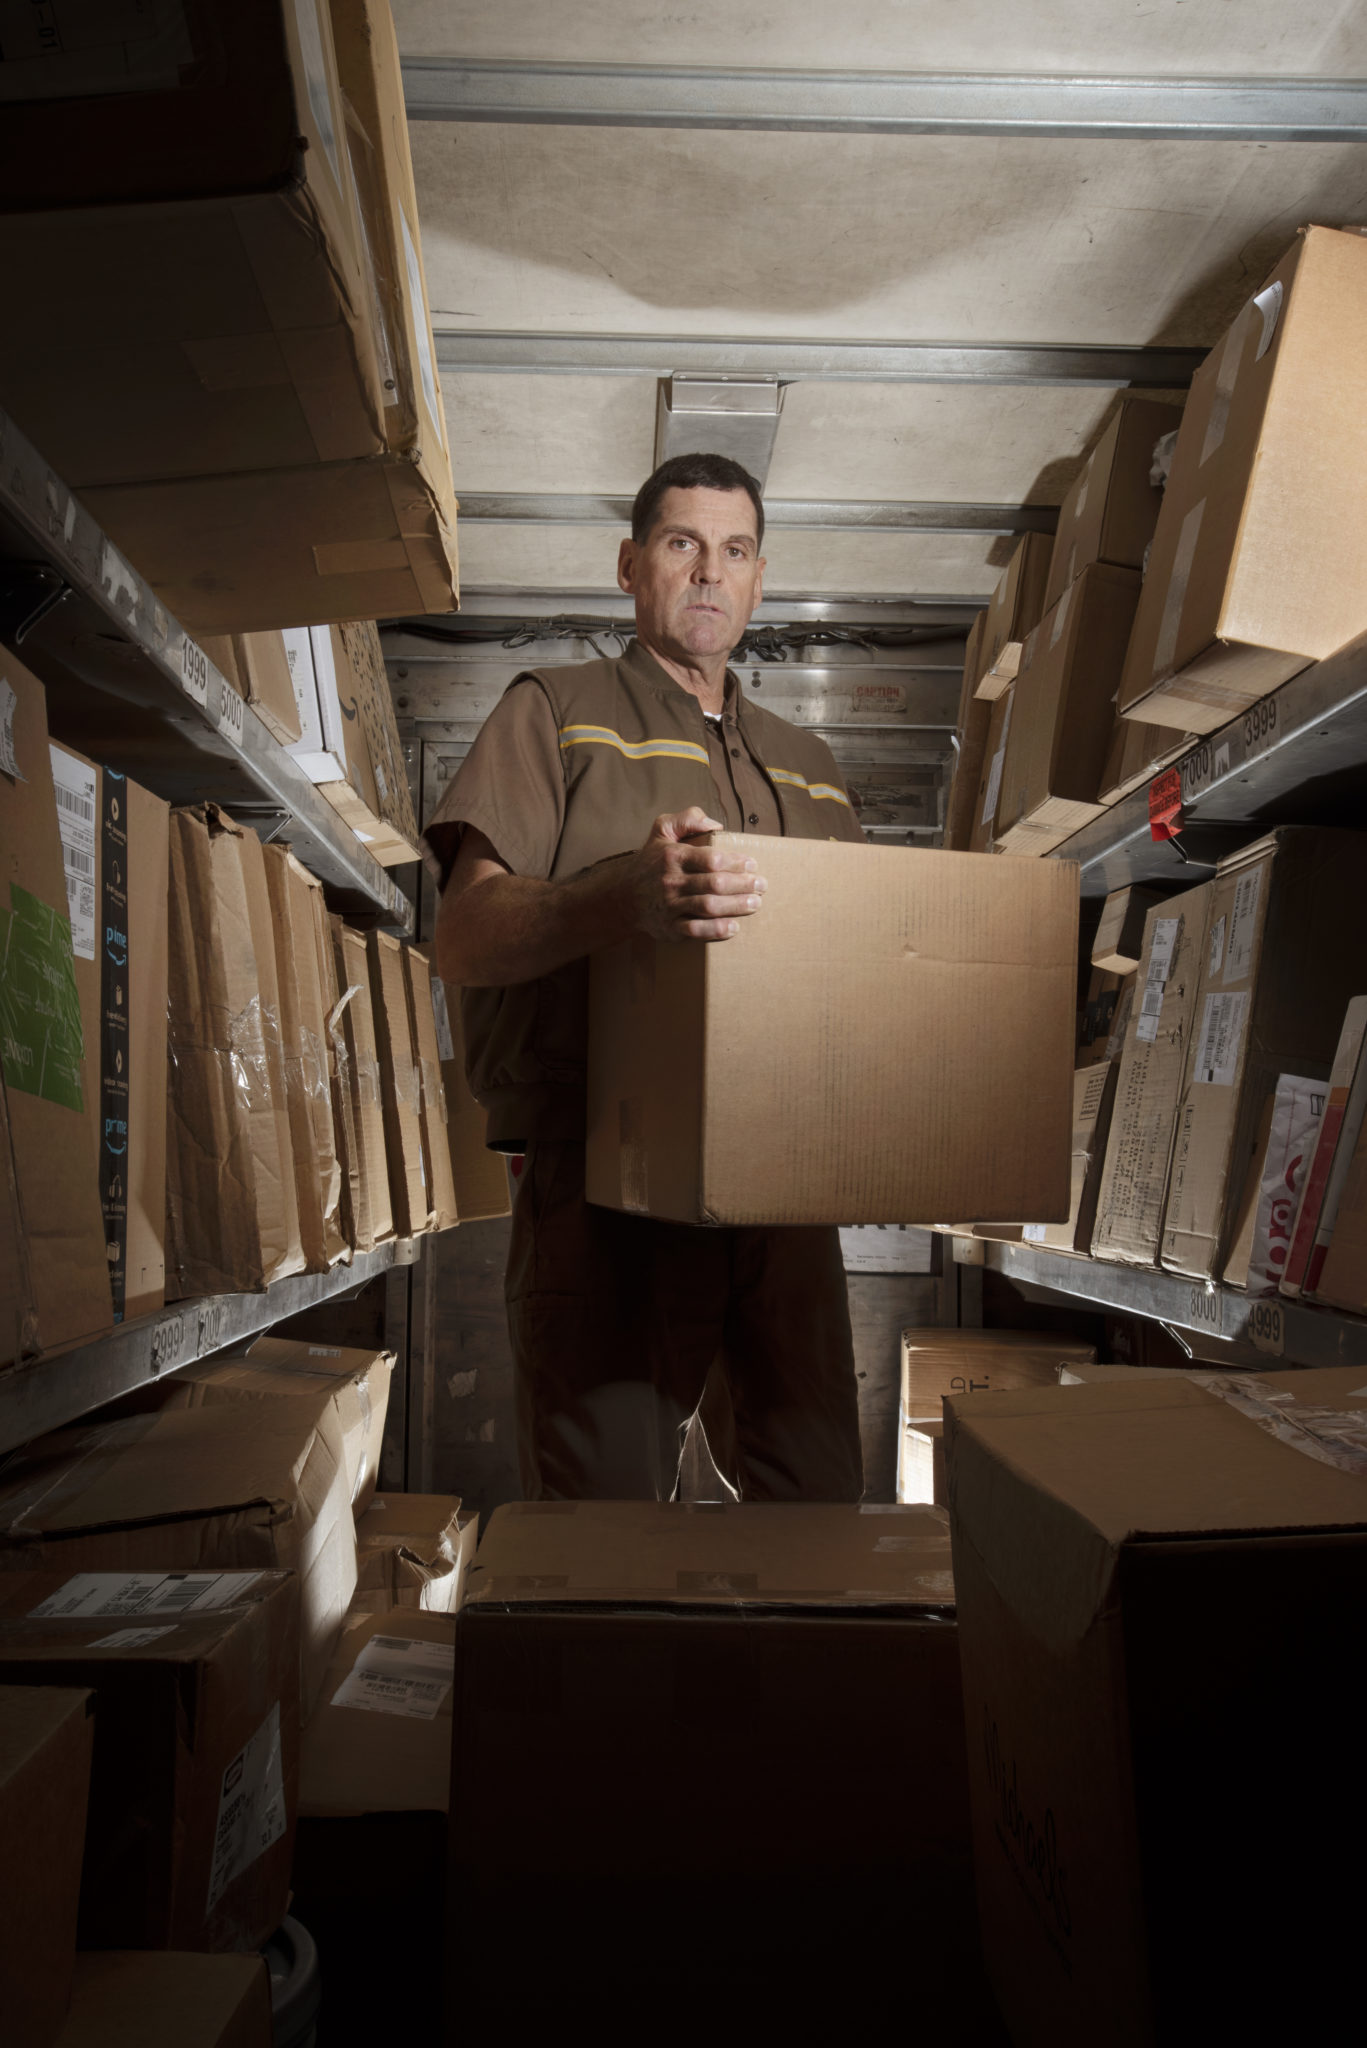 UPS delivery truck driver Jerry Tolman, 55, at the UPS Customer Center in Santa Rosa, California, May 27, 2020. (Photo: Erik Castro/for Sonoma Magazine)